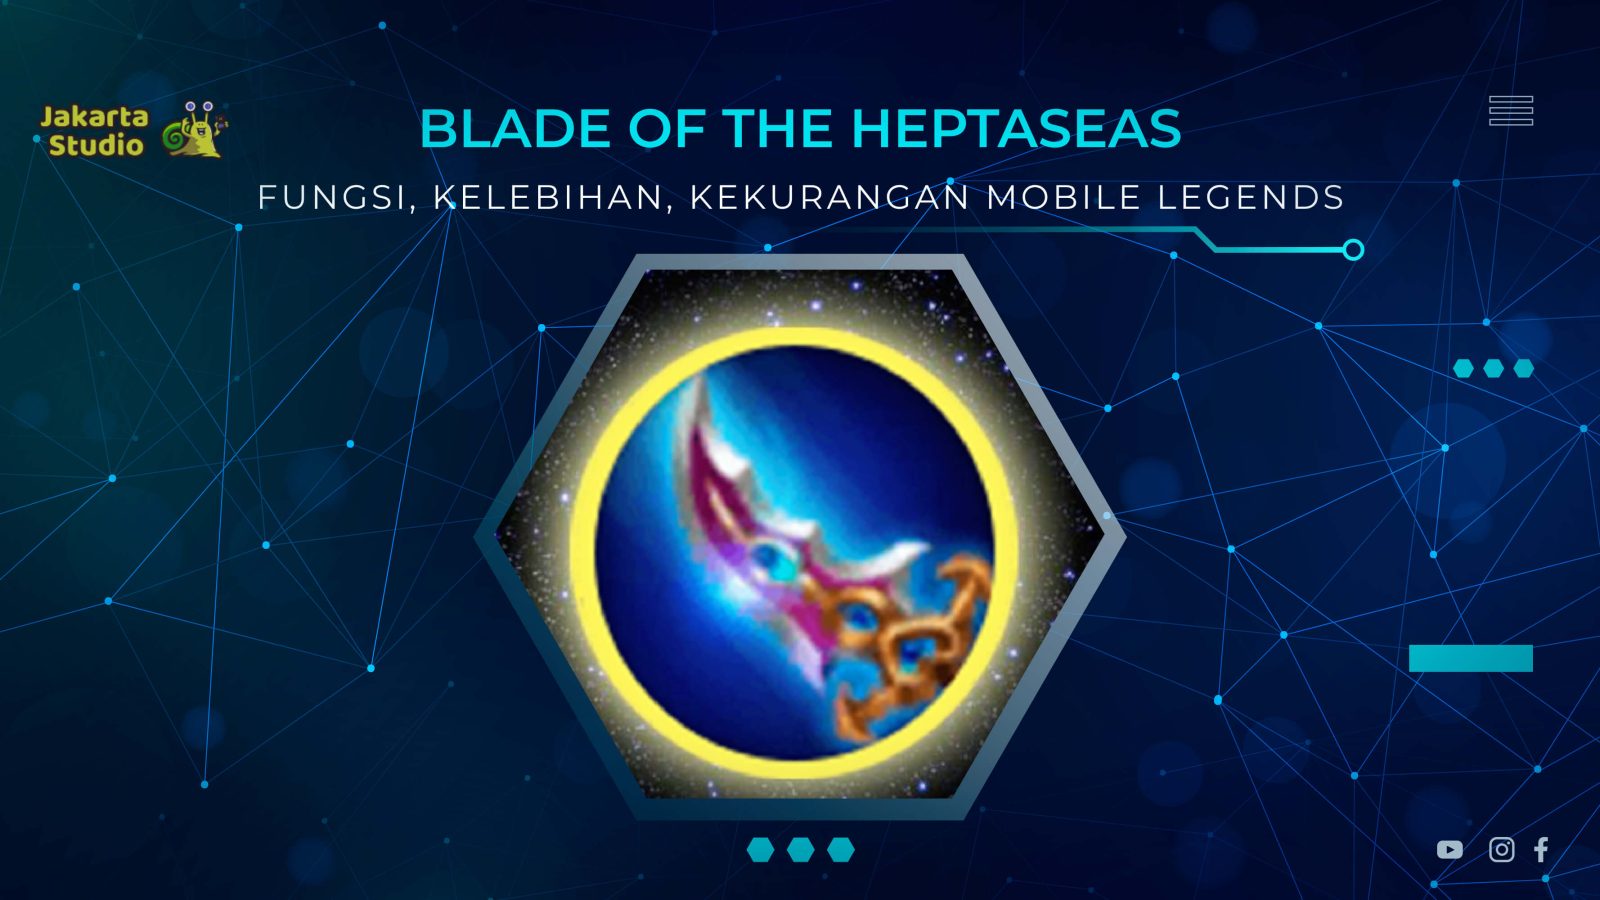 Fungsi Blade of the Heptaseas